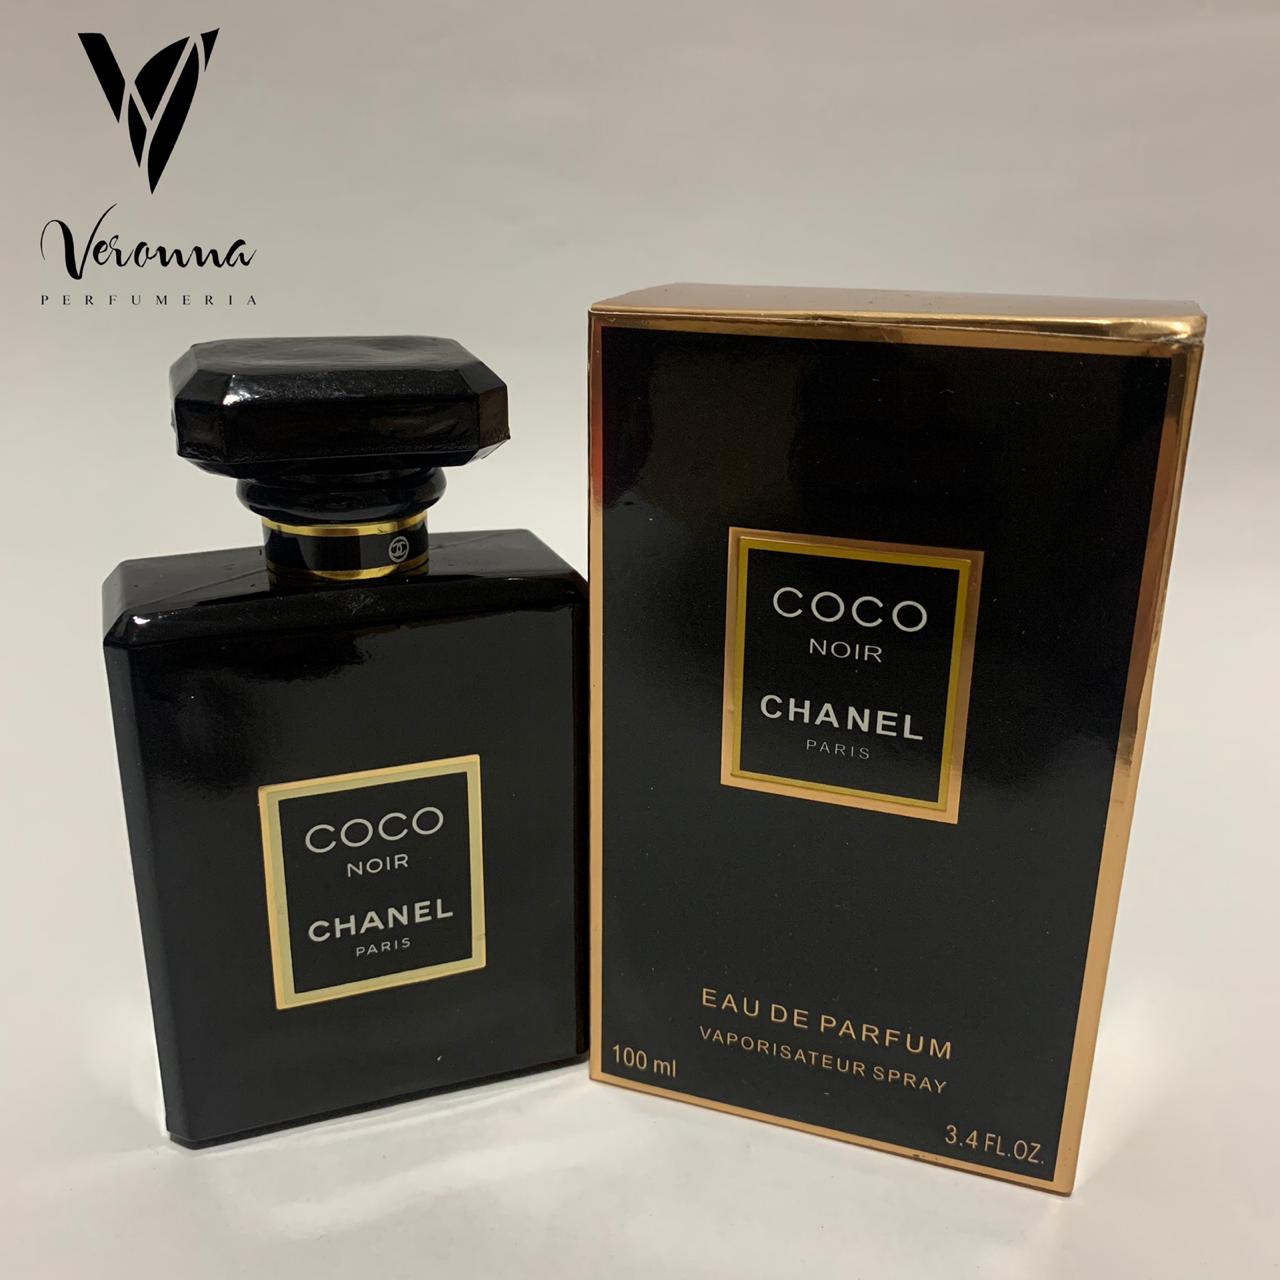 Coco Noir CHANEL 1.1 + Decant